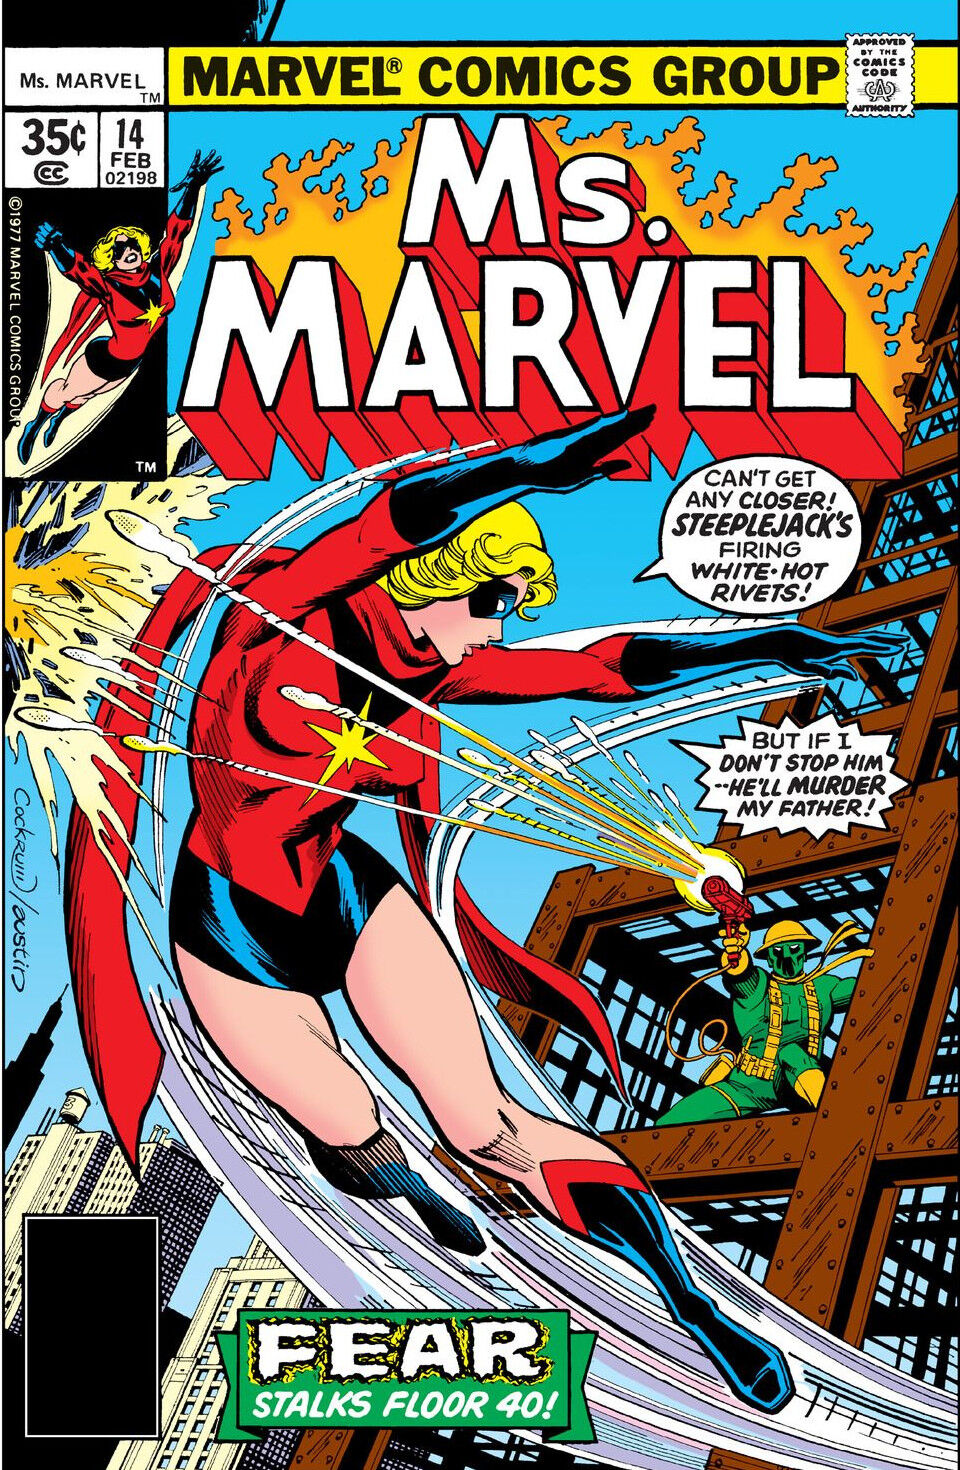 Ms. Marvel Volume 1 #14